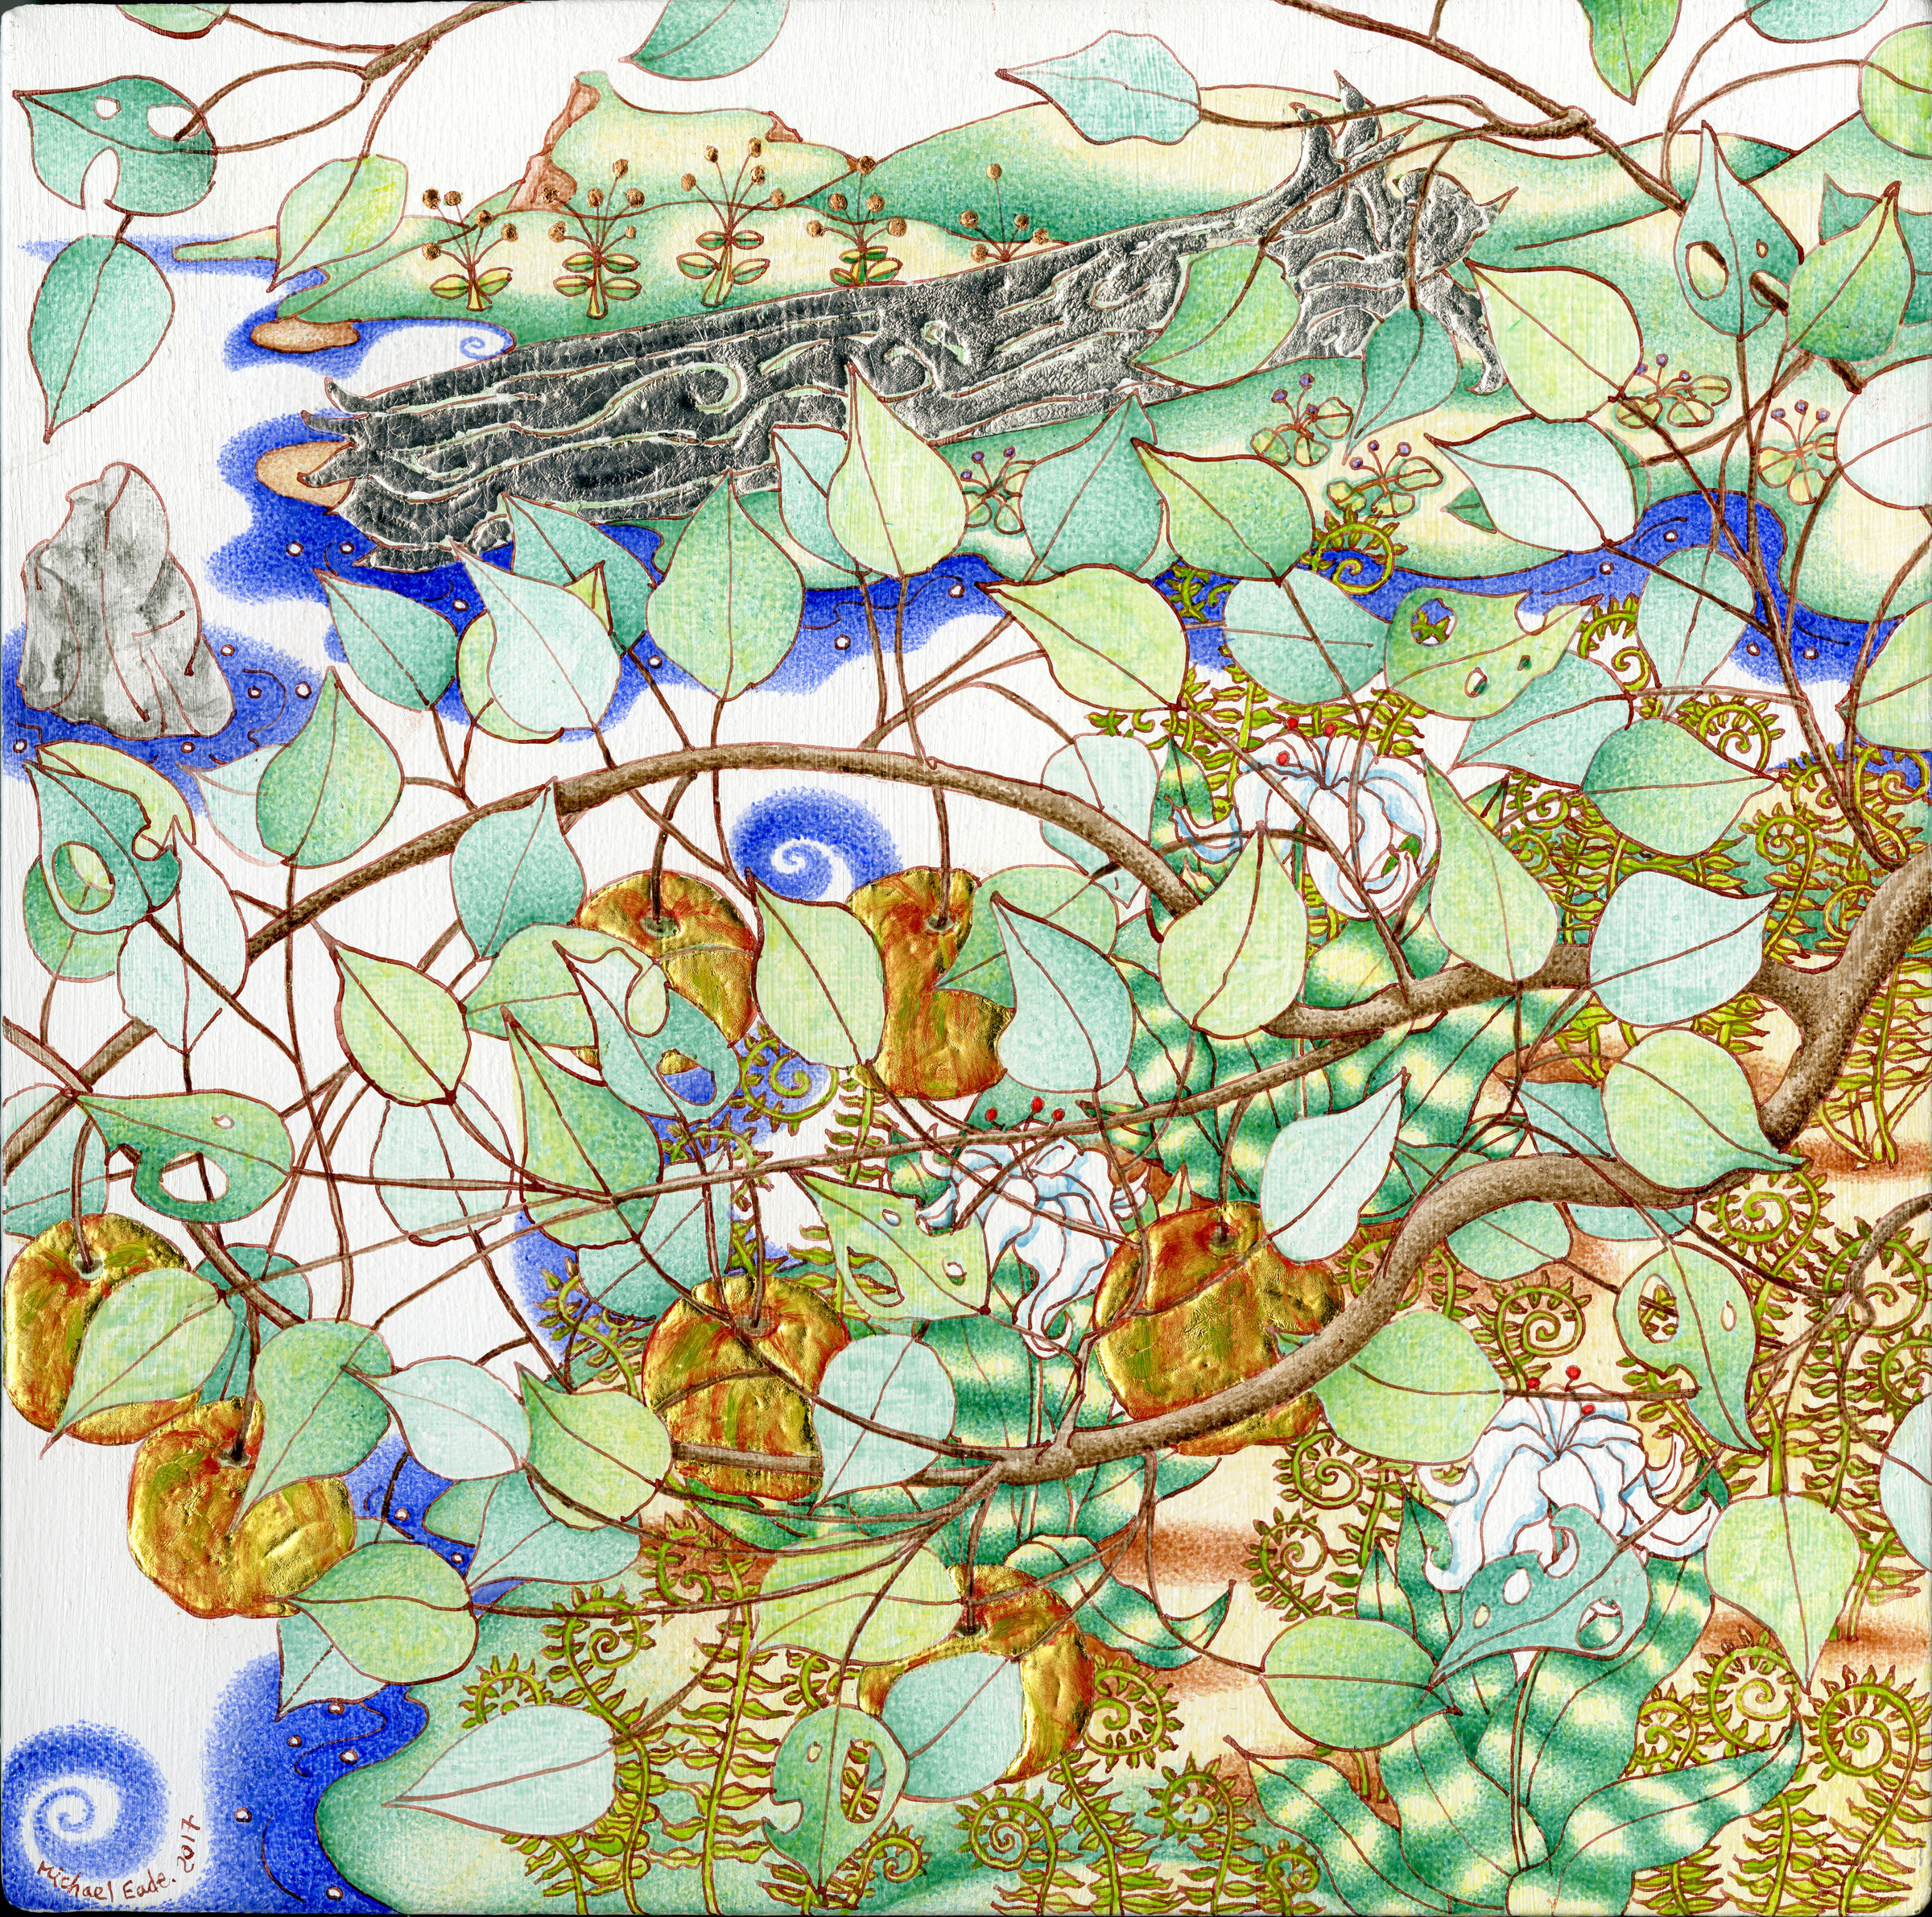  Micheal Eade.  Fiddlehead Ferns, Lilies and Gilded Apples, no. 2 蕨类、百合与金苹果 2， Egg tempera, raised 22k gold leaf, raised copper and aluminum leaf, oil on canvas, 11 x 11 in. (27.9 x 27.9 cm), 2017. 